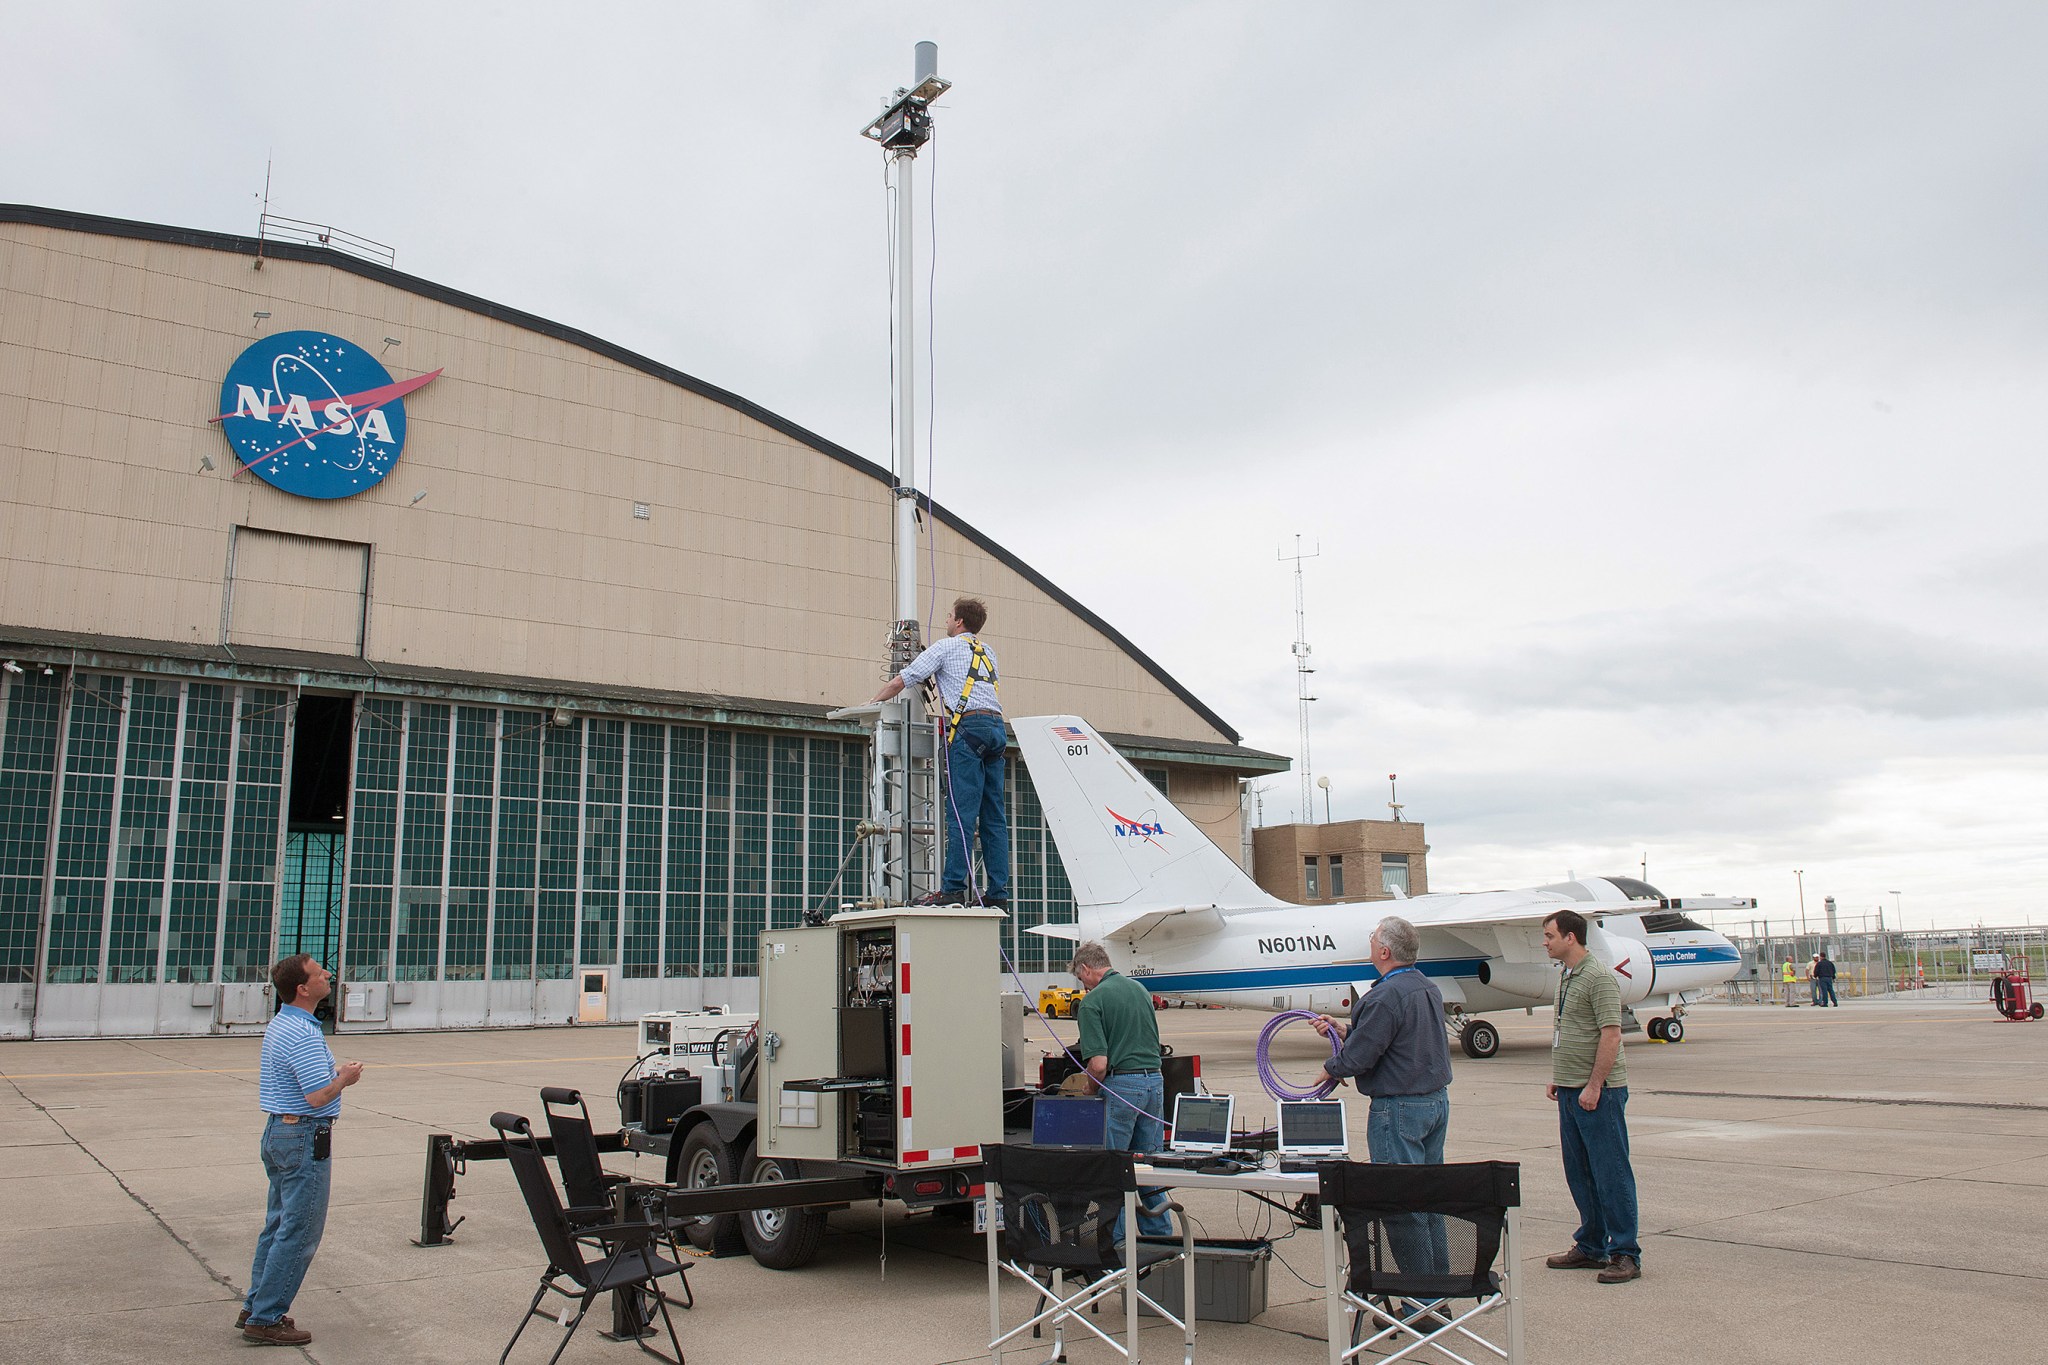 NASA engineer standing on the trailer.